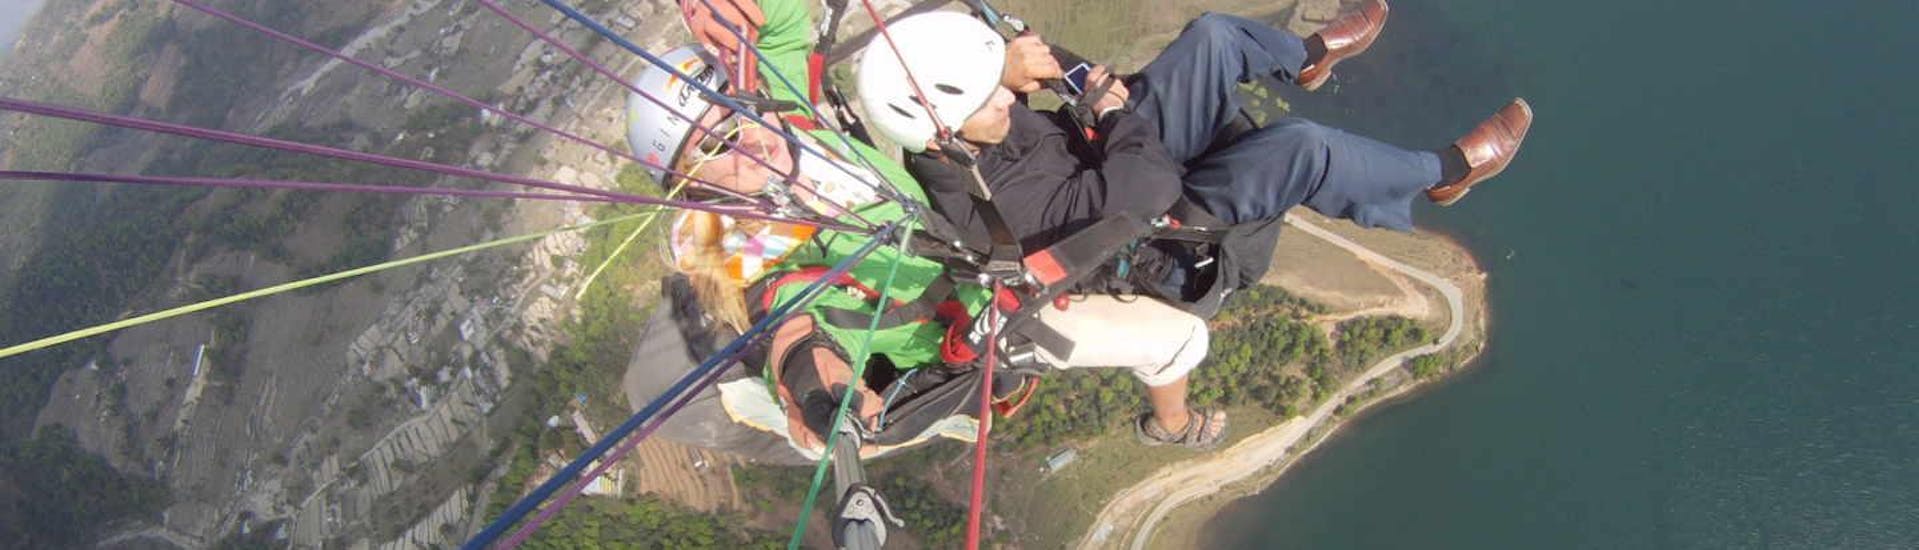 Tandem Paragliding "Lake Flight" - Lazio.